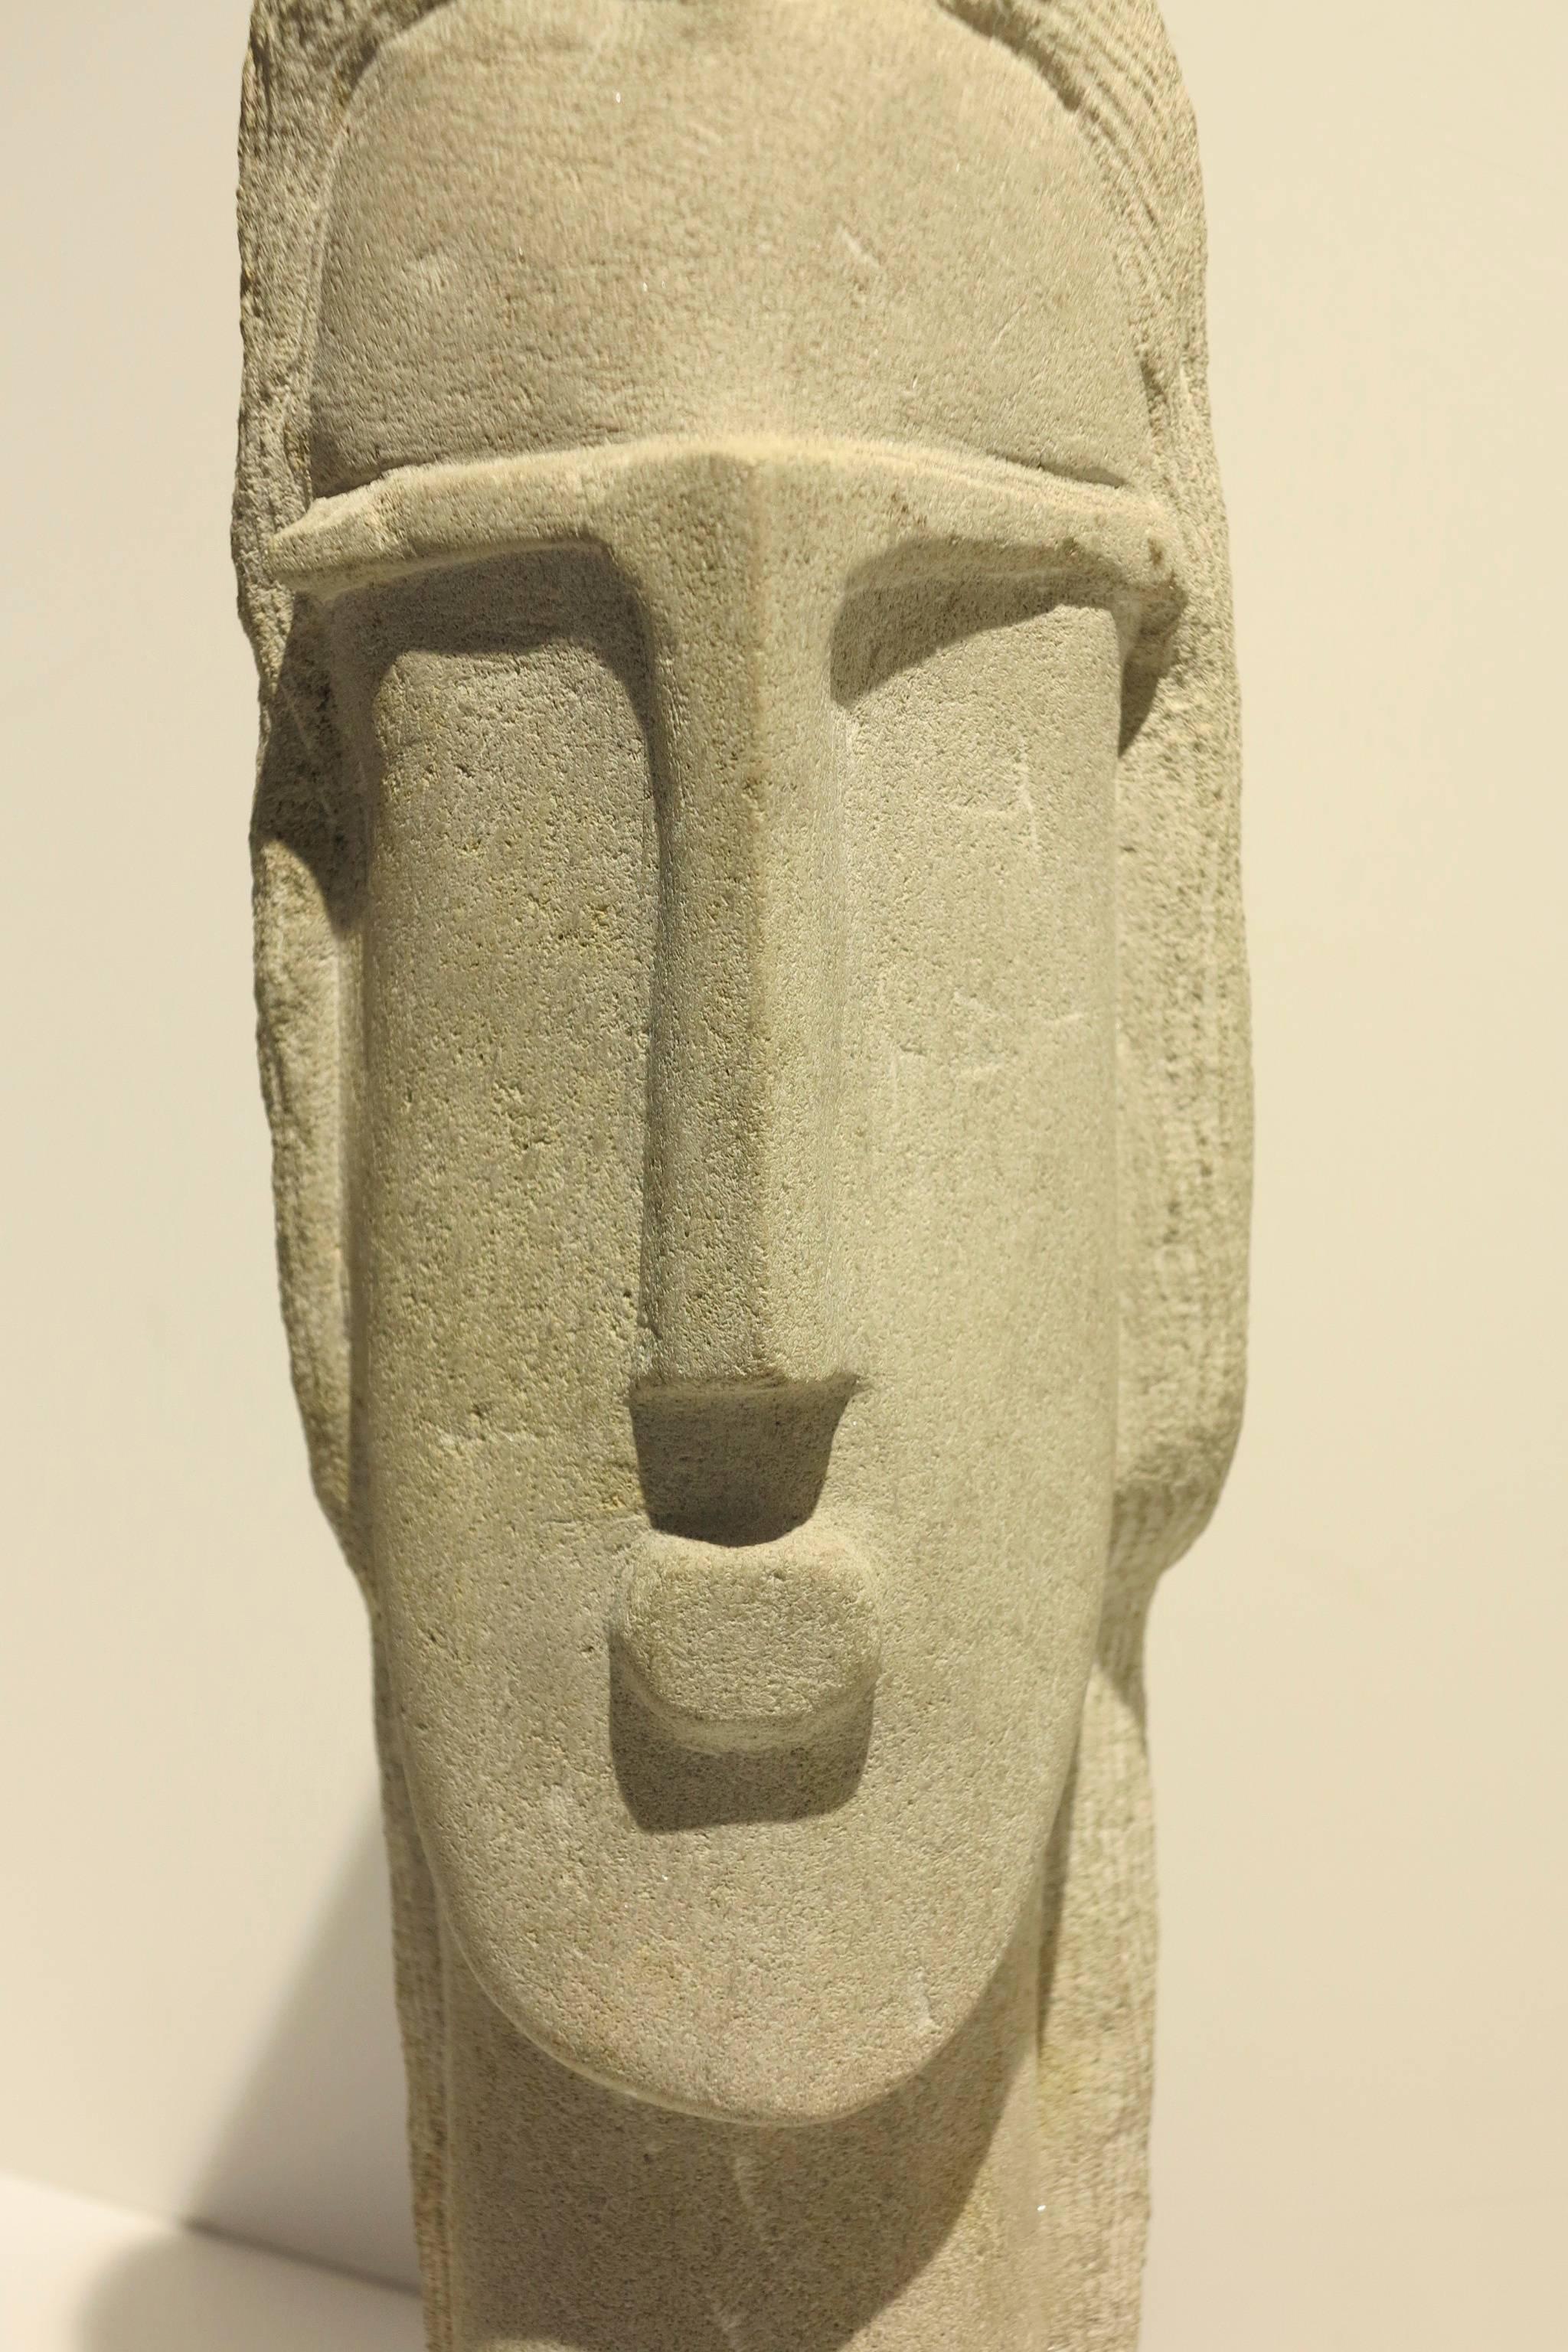 Head of Woman - Modern Sculpture by Umana (Rafael Alfonso Umaña Mendez)